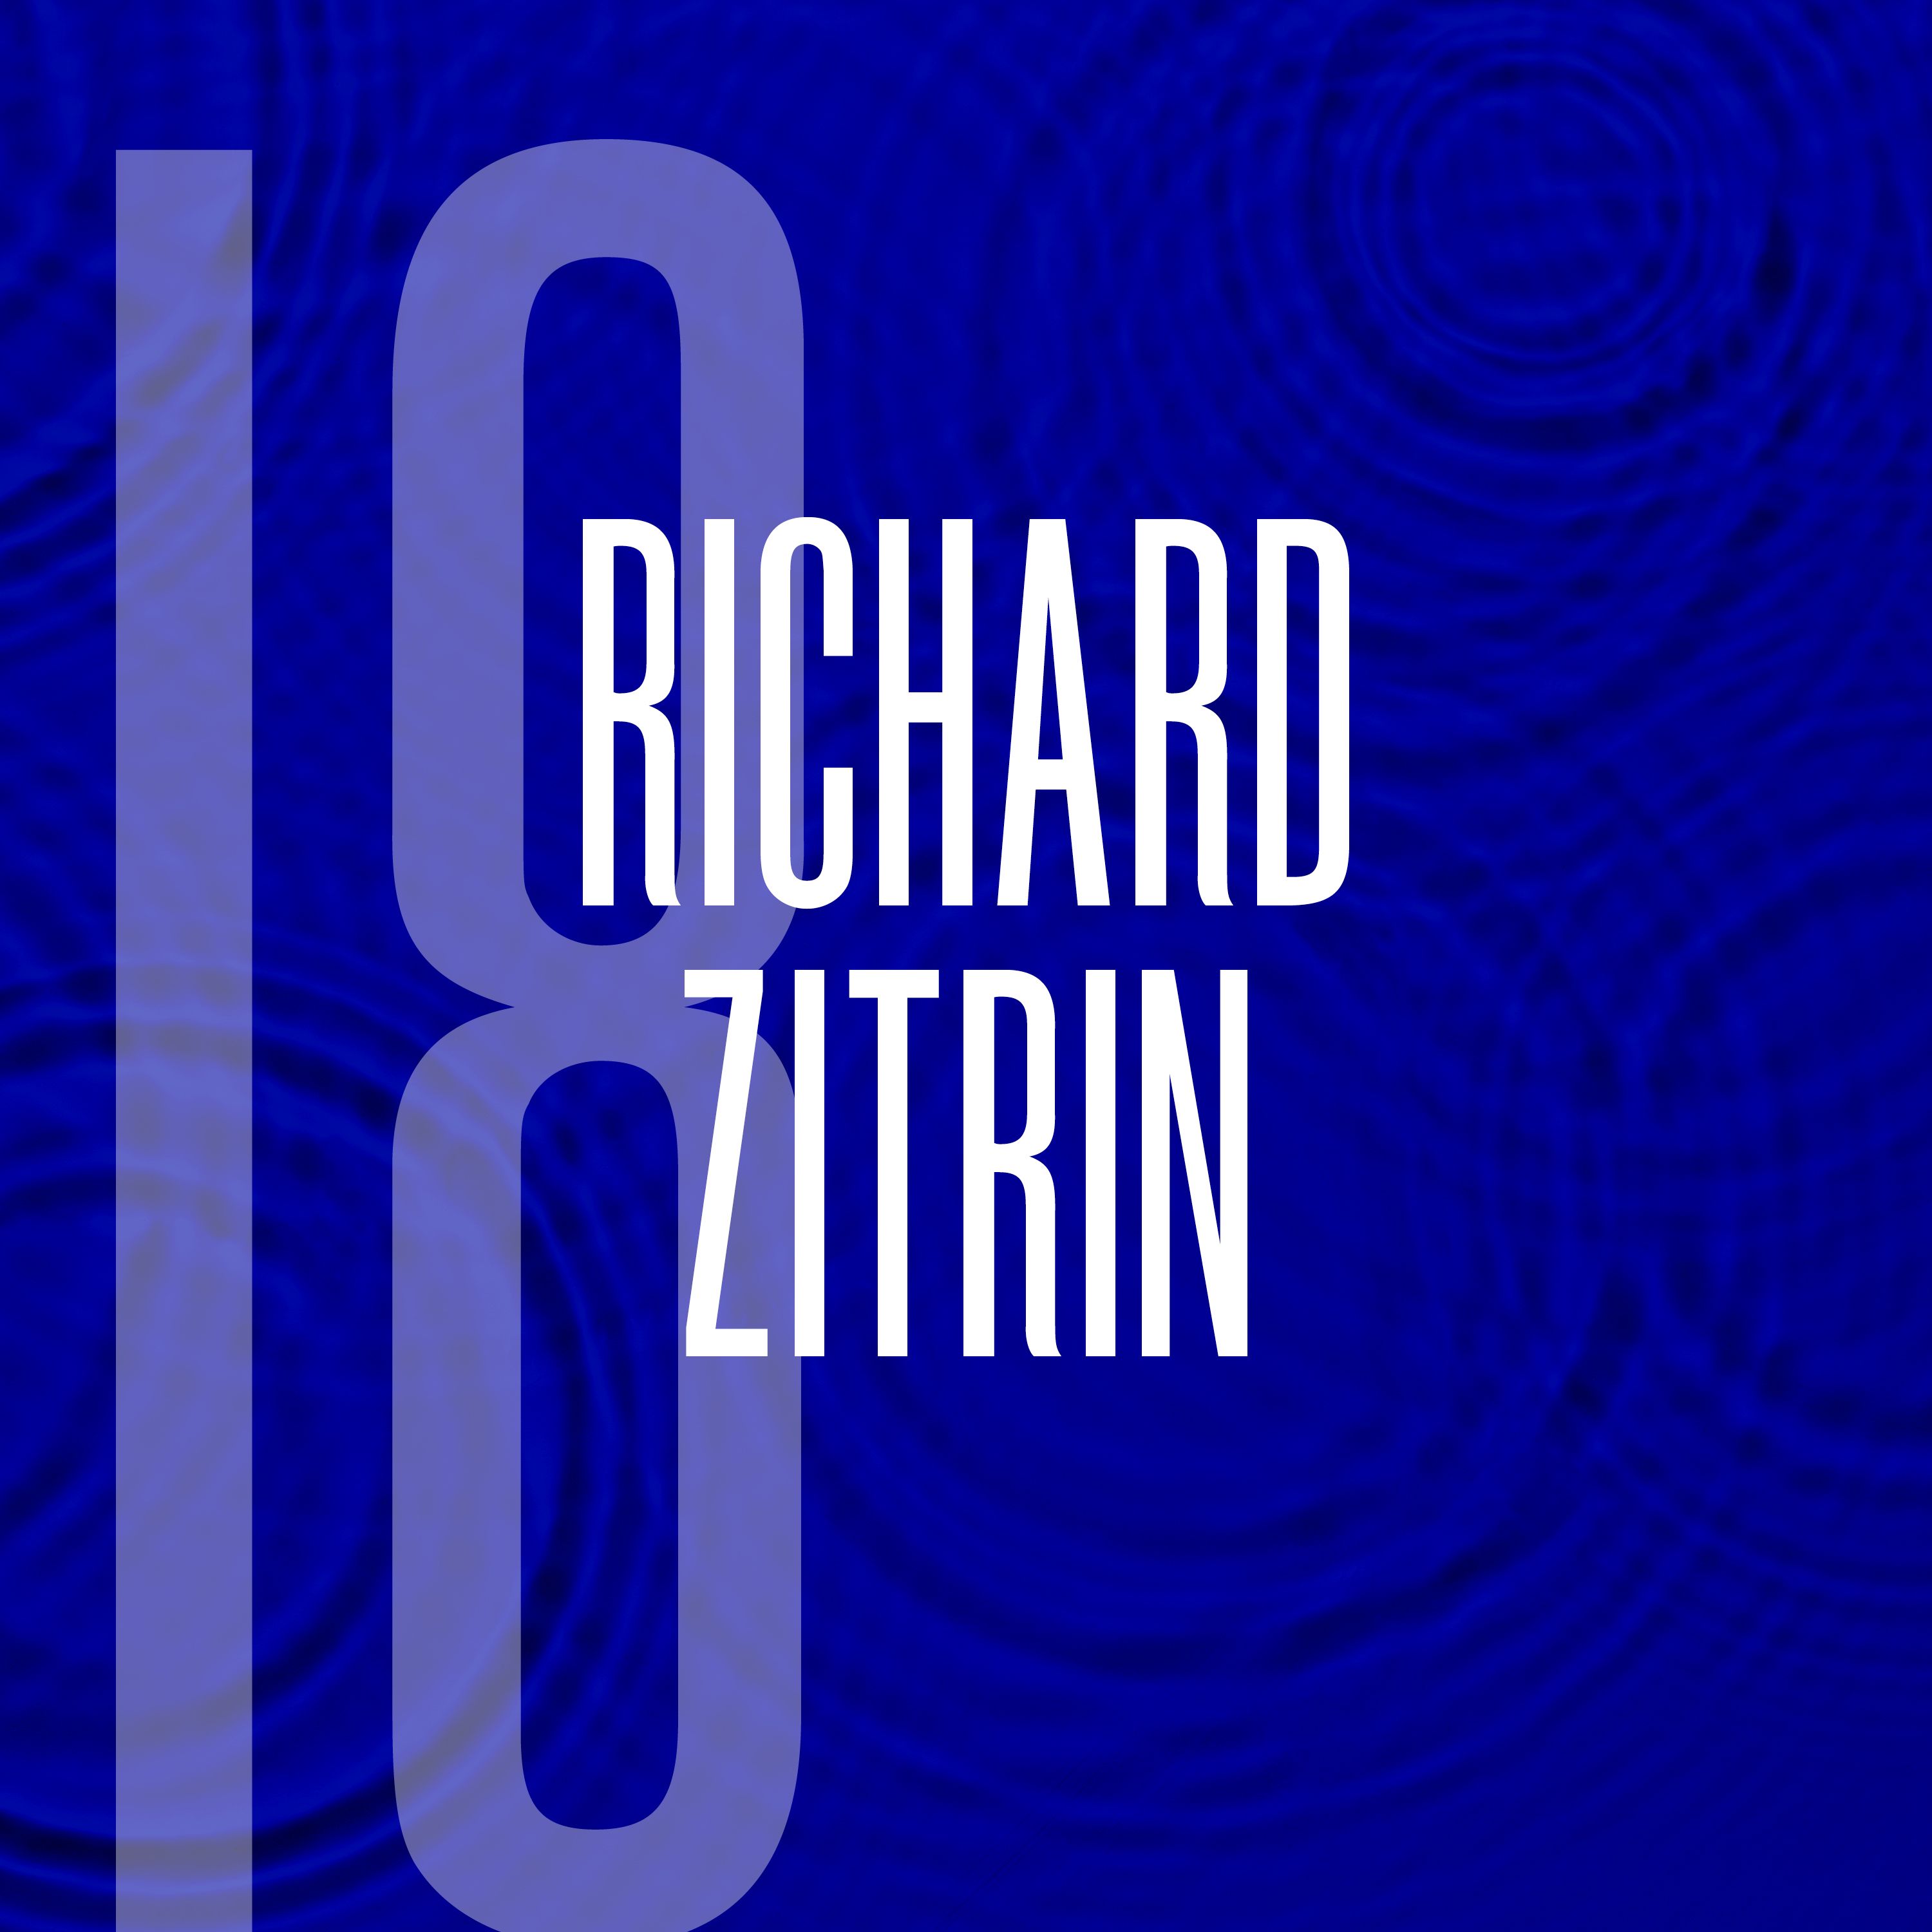 18: Richard Zitrin: Deep Dive into the San Quentin 6 Case